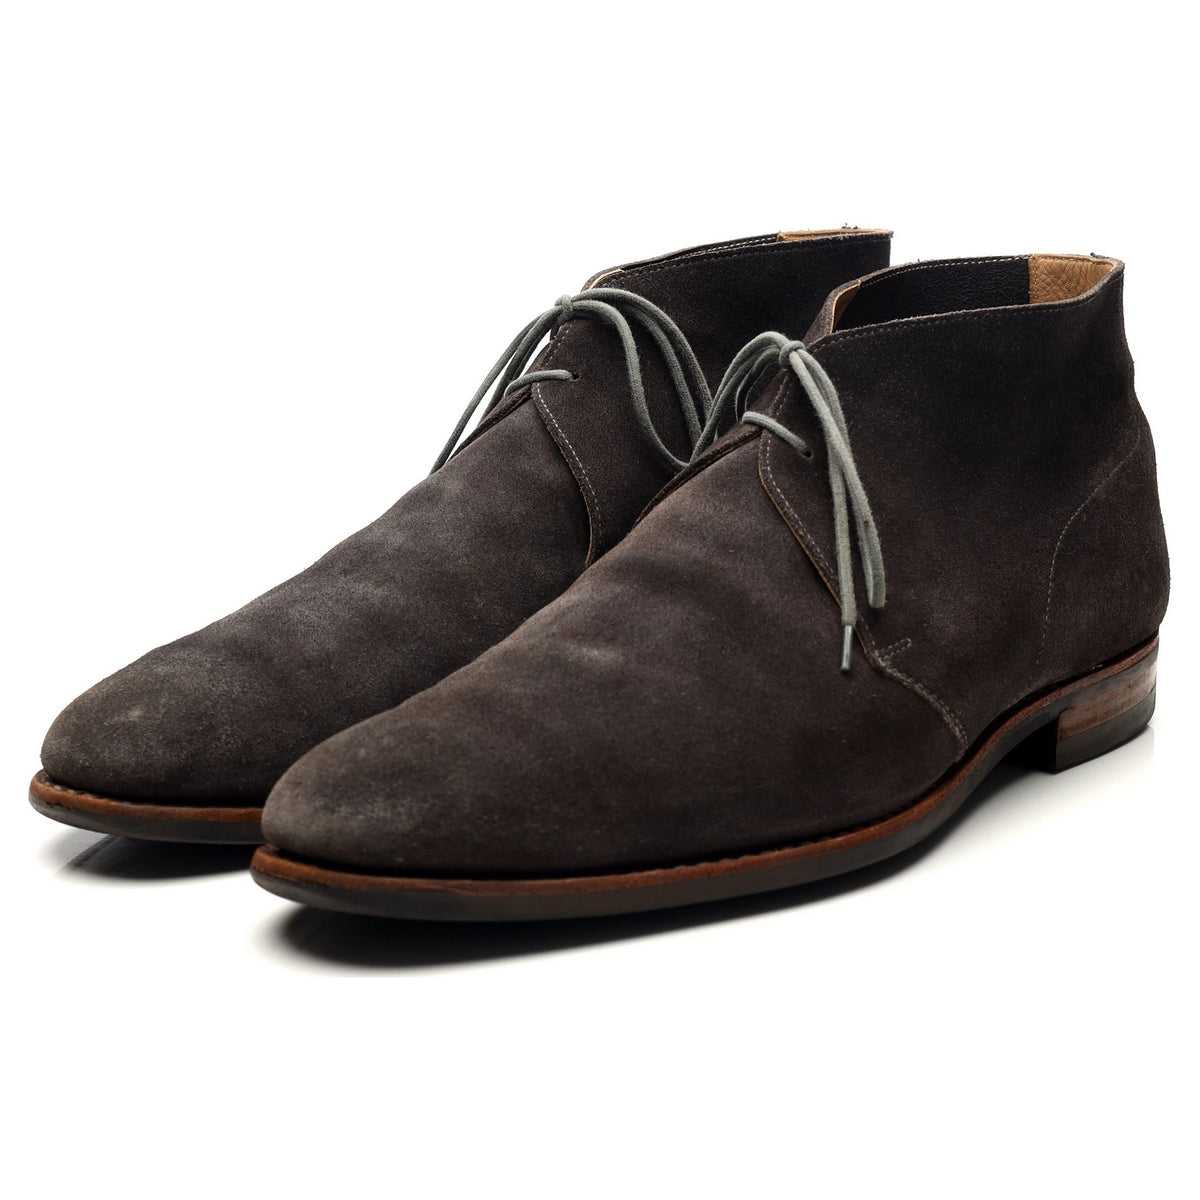 &#39;Hartland&#39; Grey Suede Chukka Boots UK 9.5 E